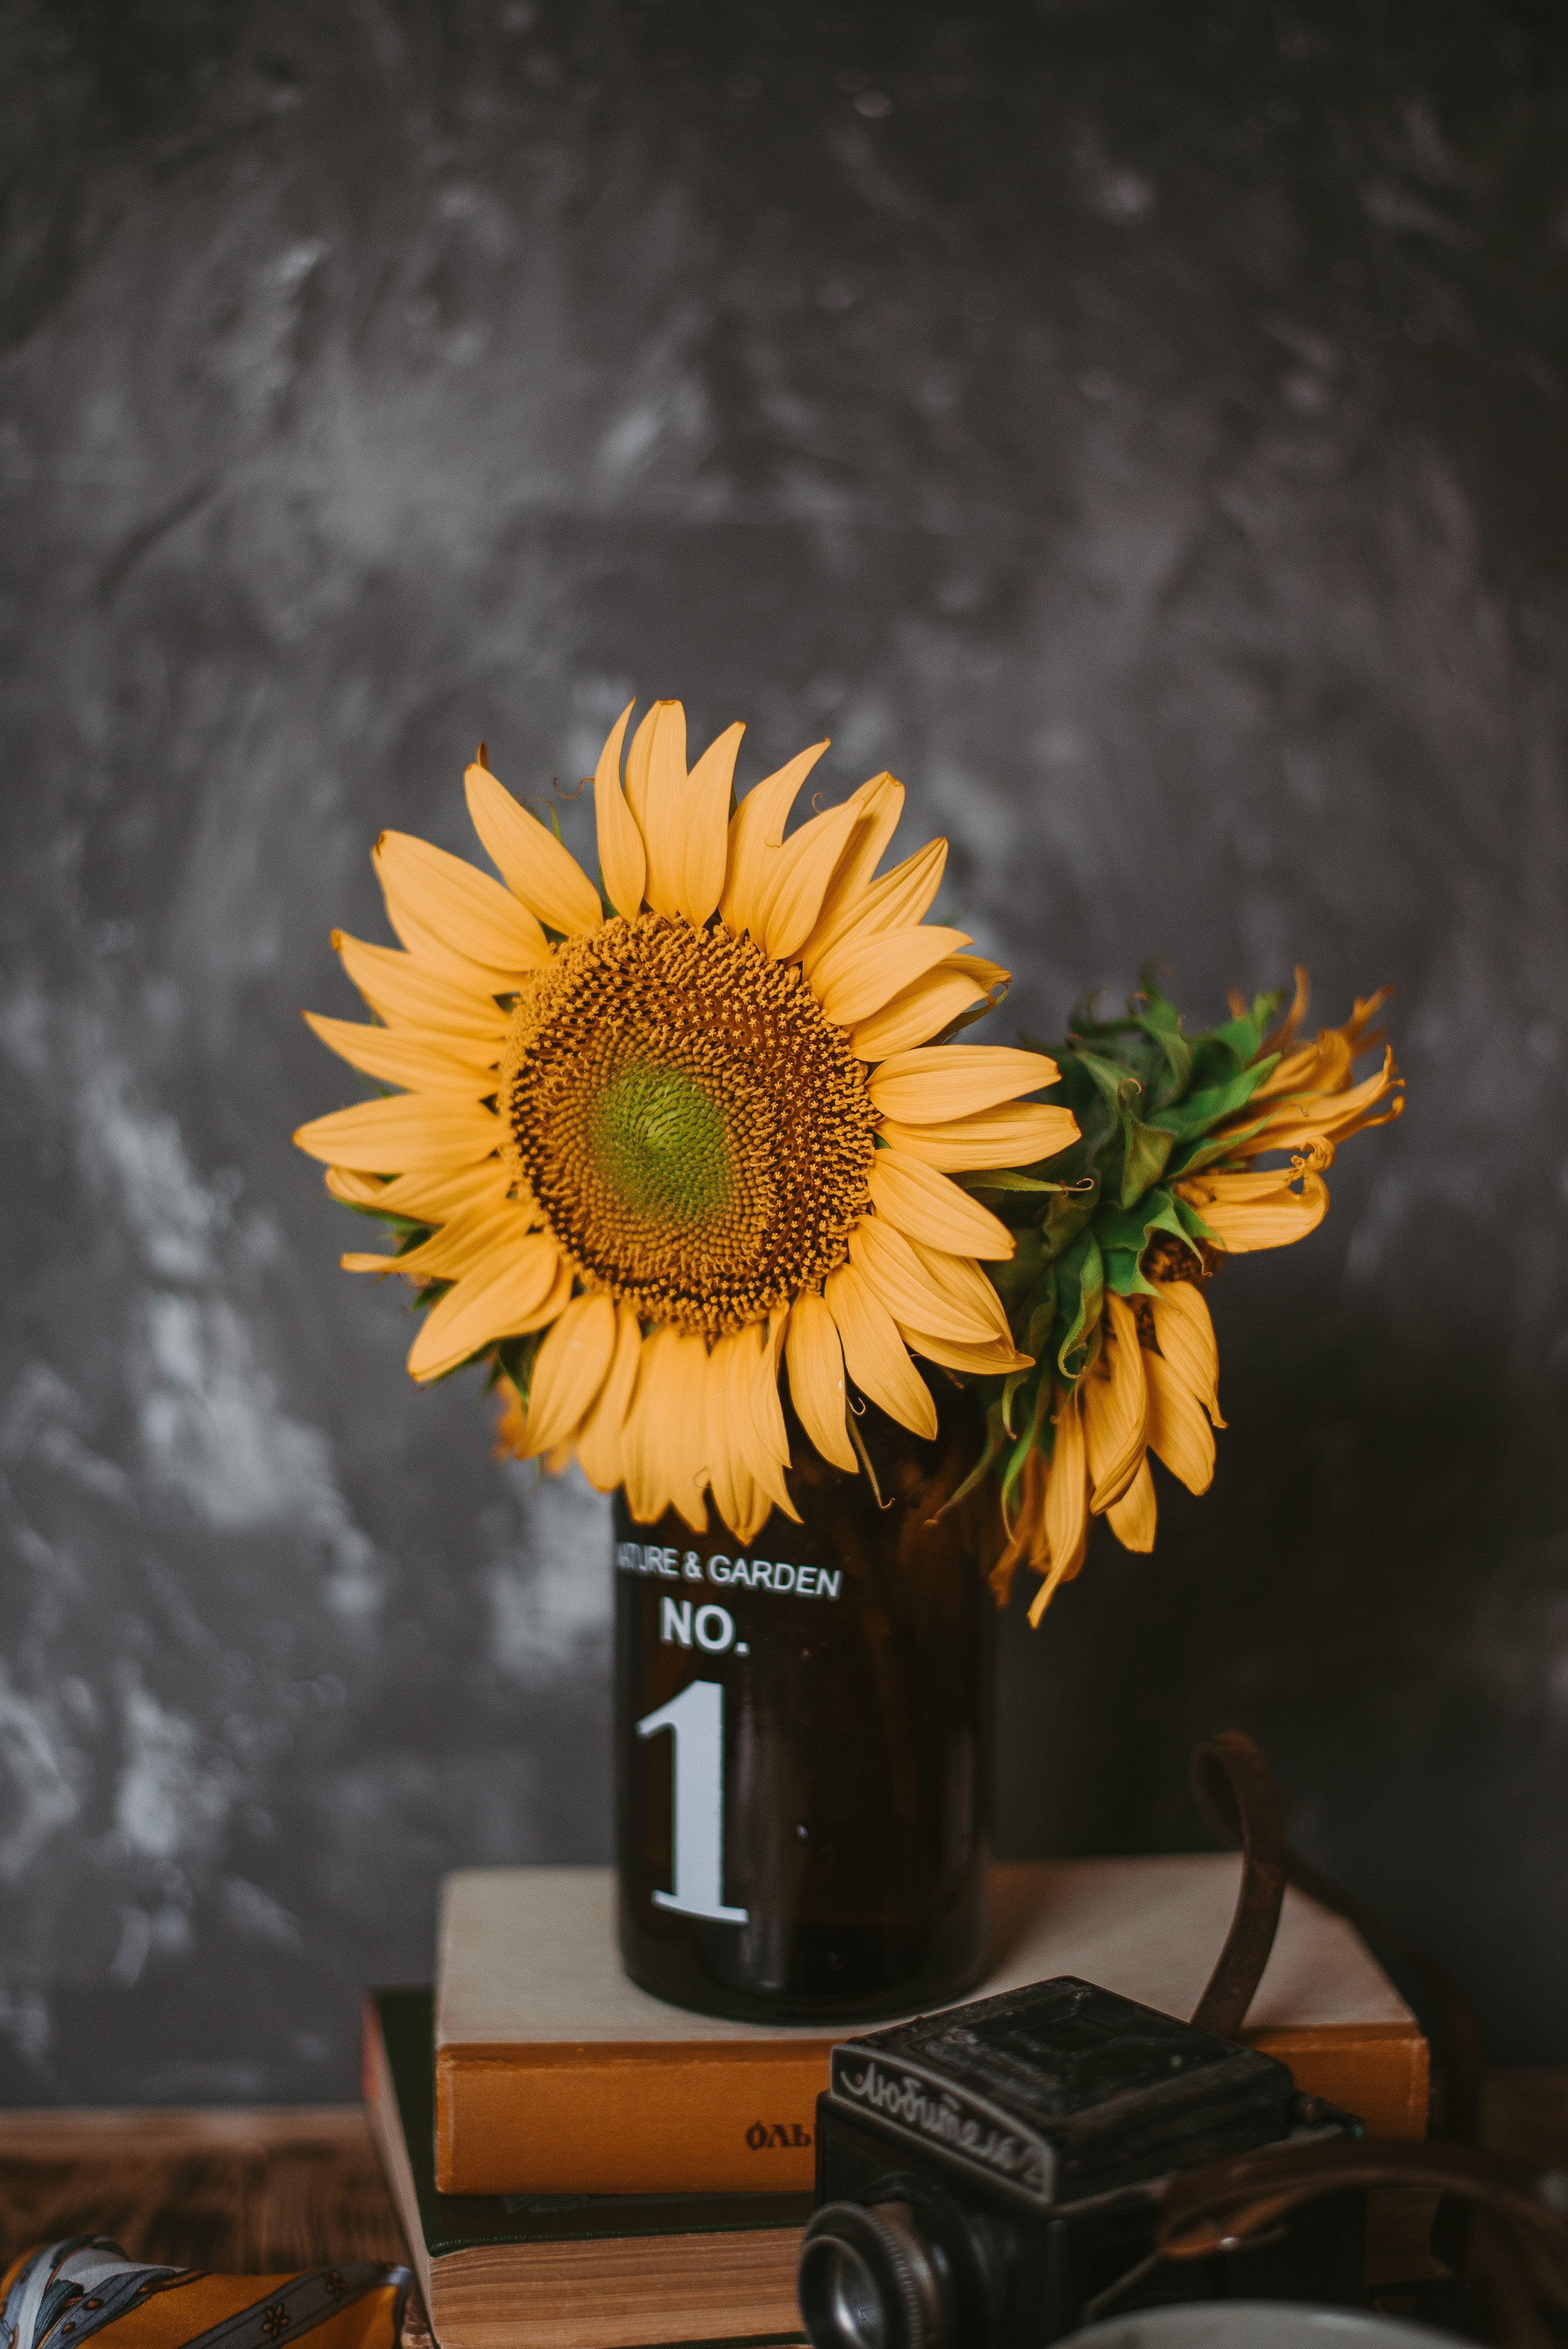 miscellanea, books, sunflowers, flowers, miscellaneous, vase, camera 1080p